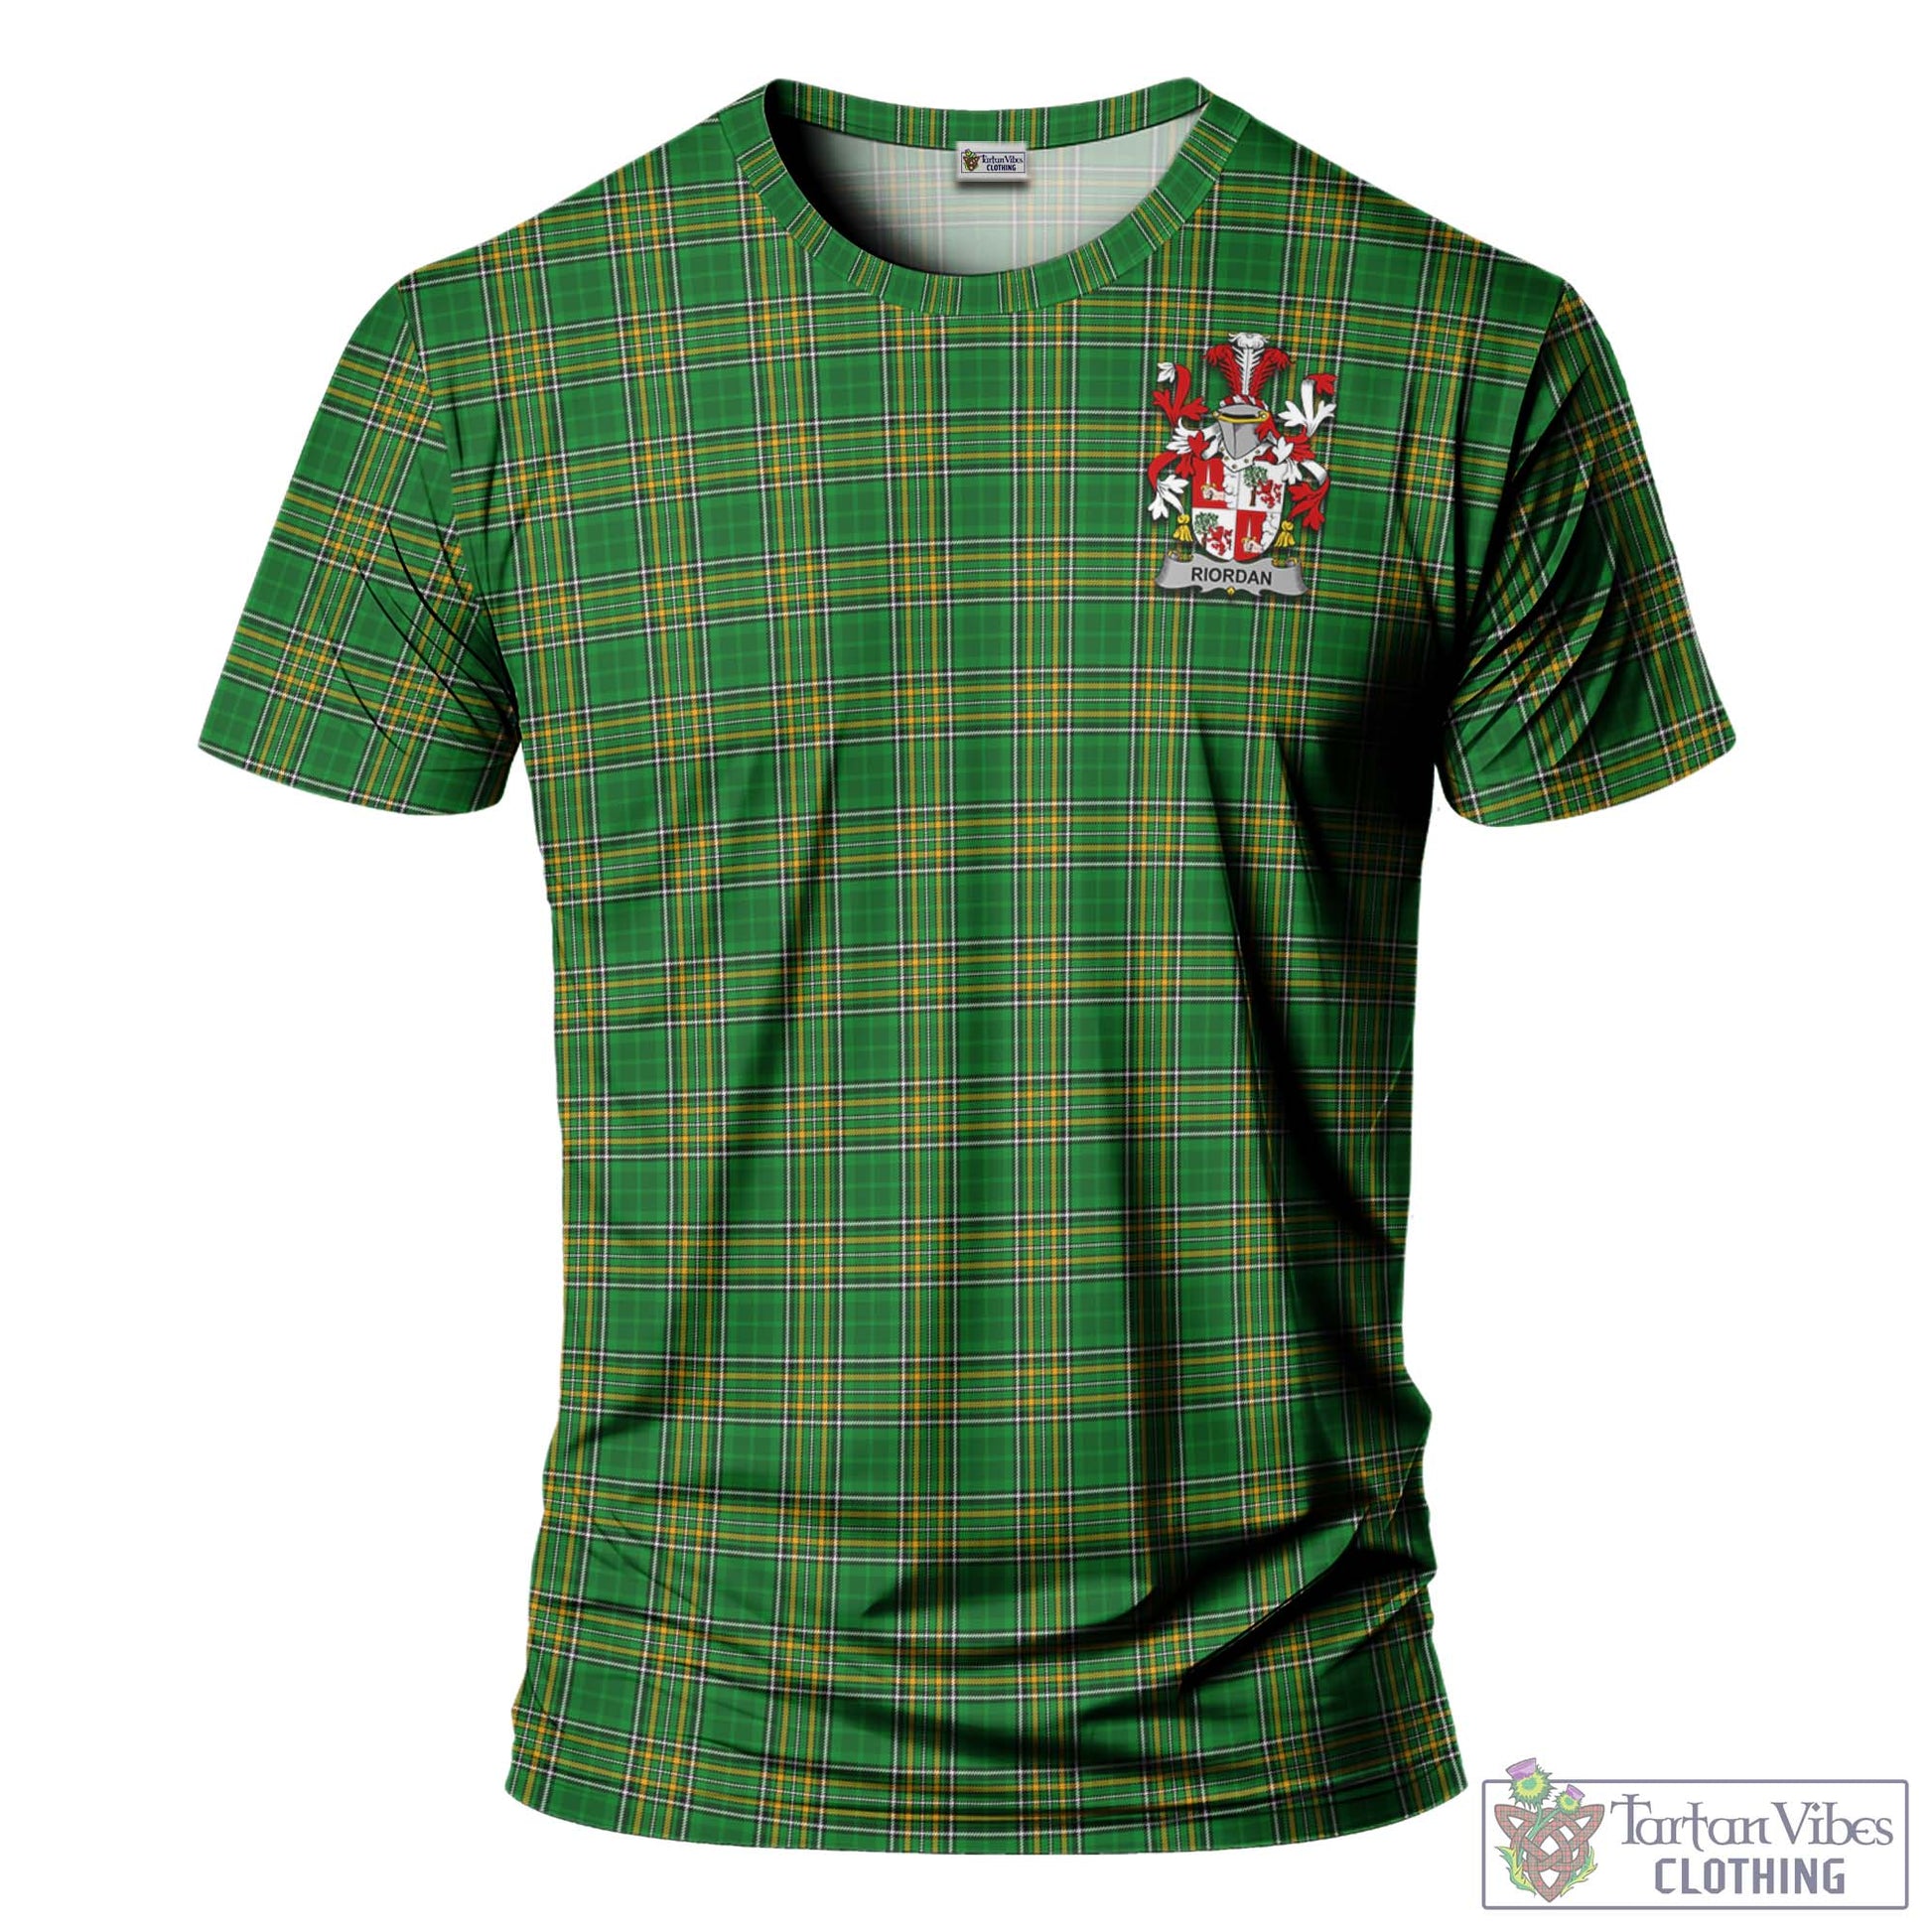 Tartan Vibes Clothing Riordan Ireland Clan Tartan T-Shirt with Family Seal